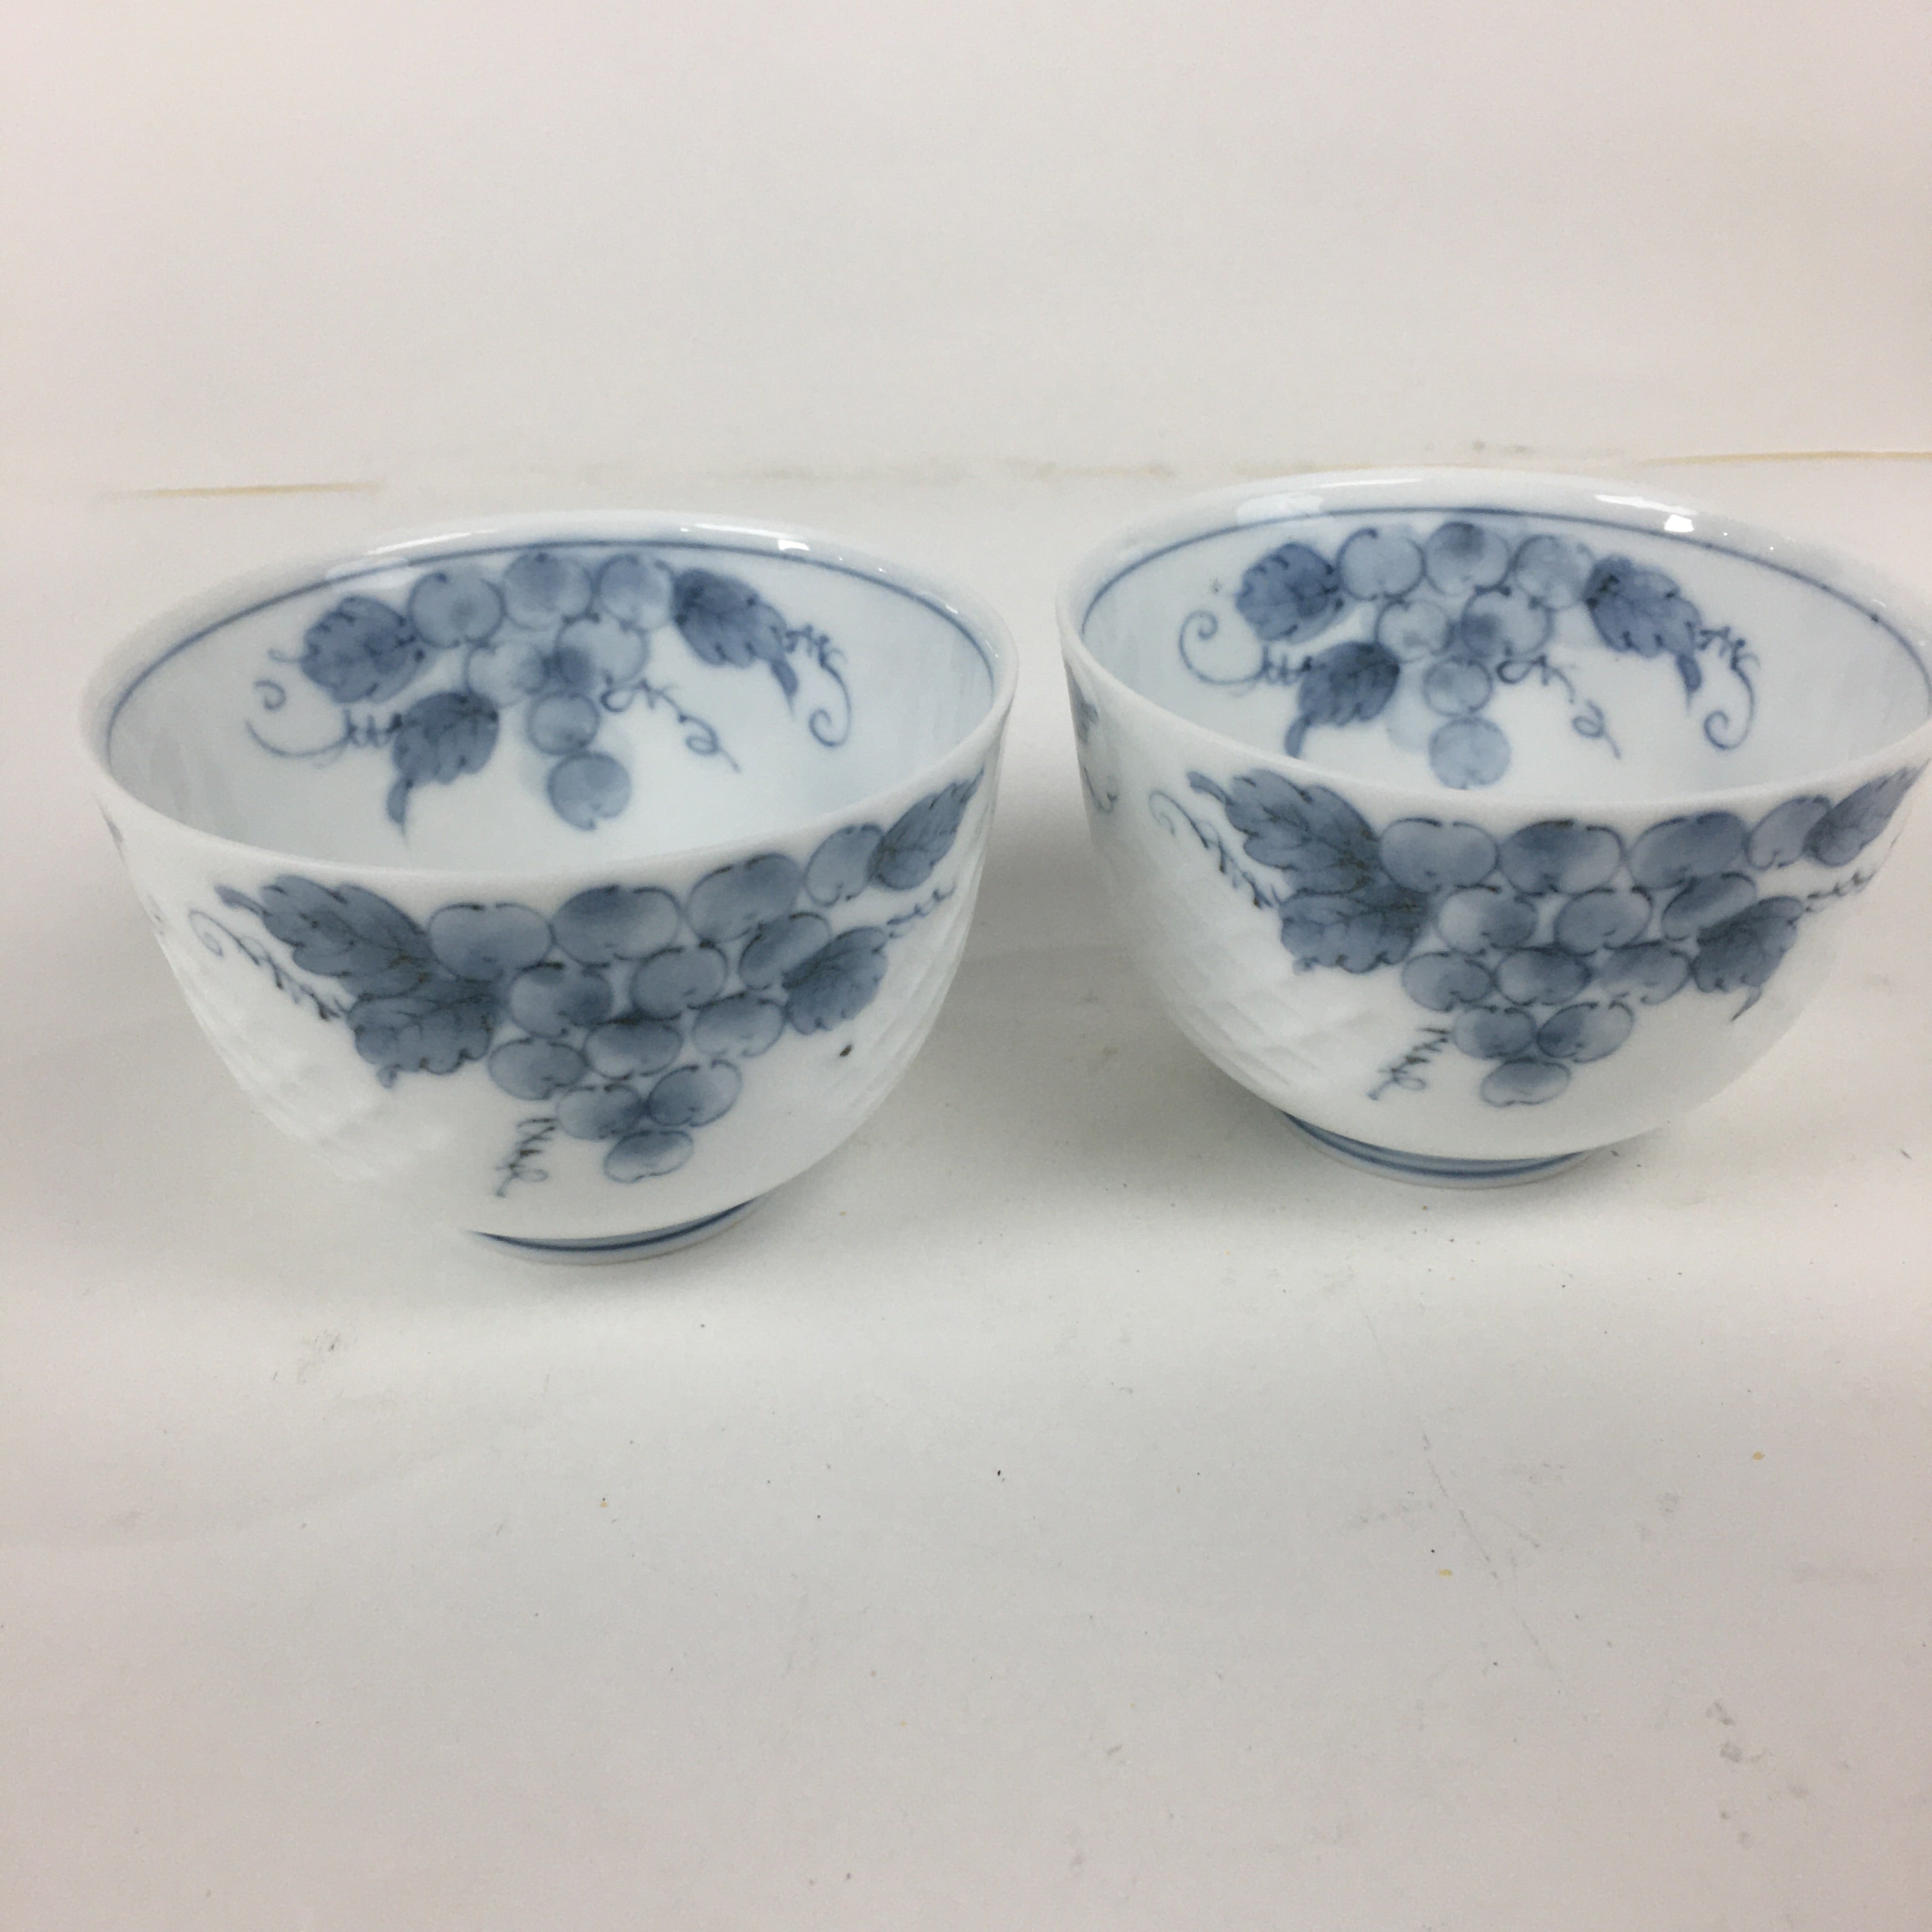 Japanese Mino Ware Cups Teapot Vtg Boxed Porcelain Yunomi Kyusu Sencha PX587